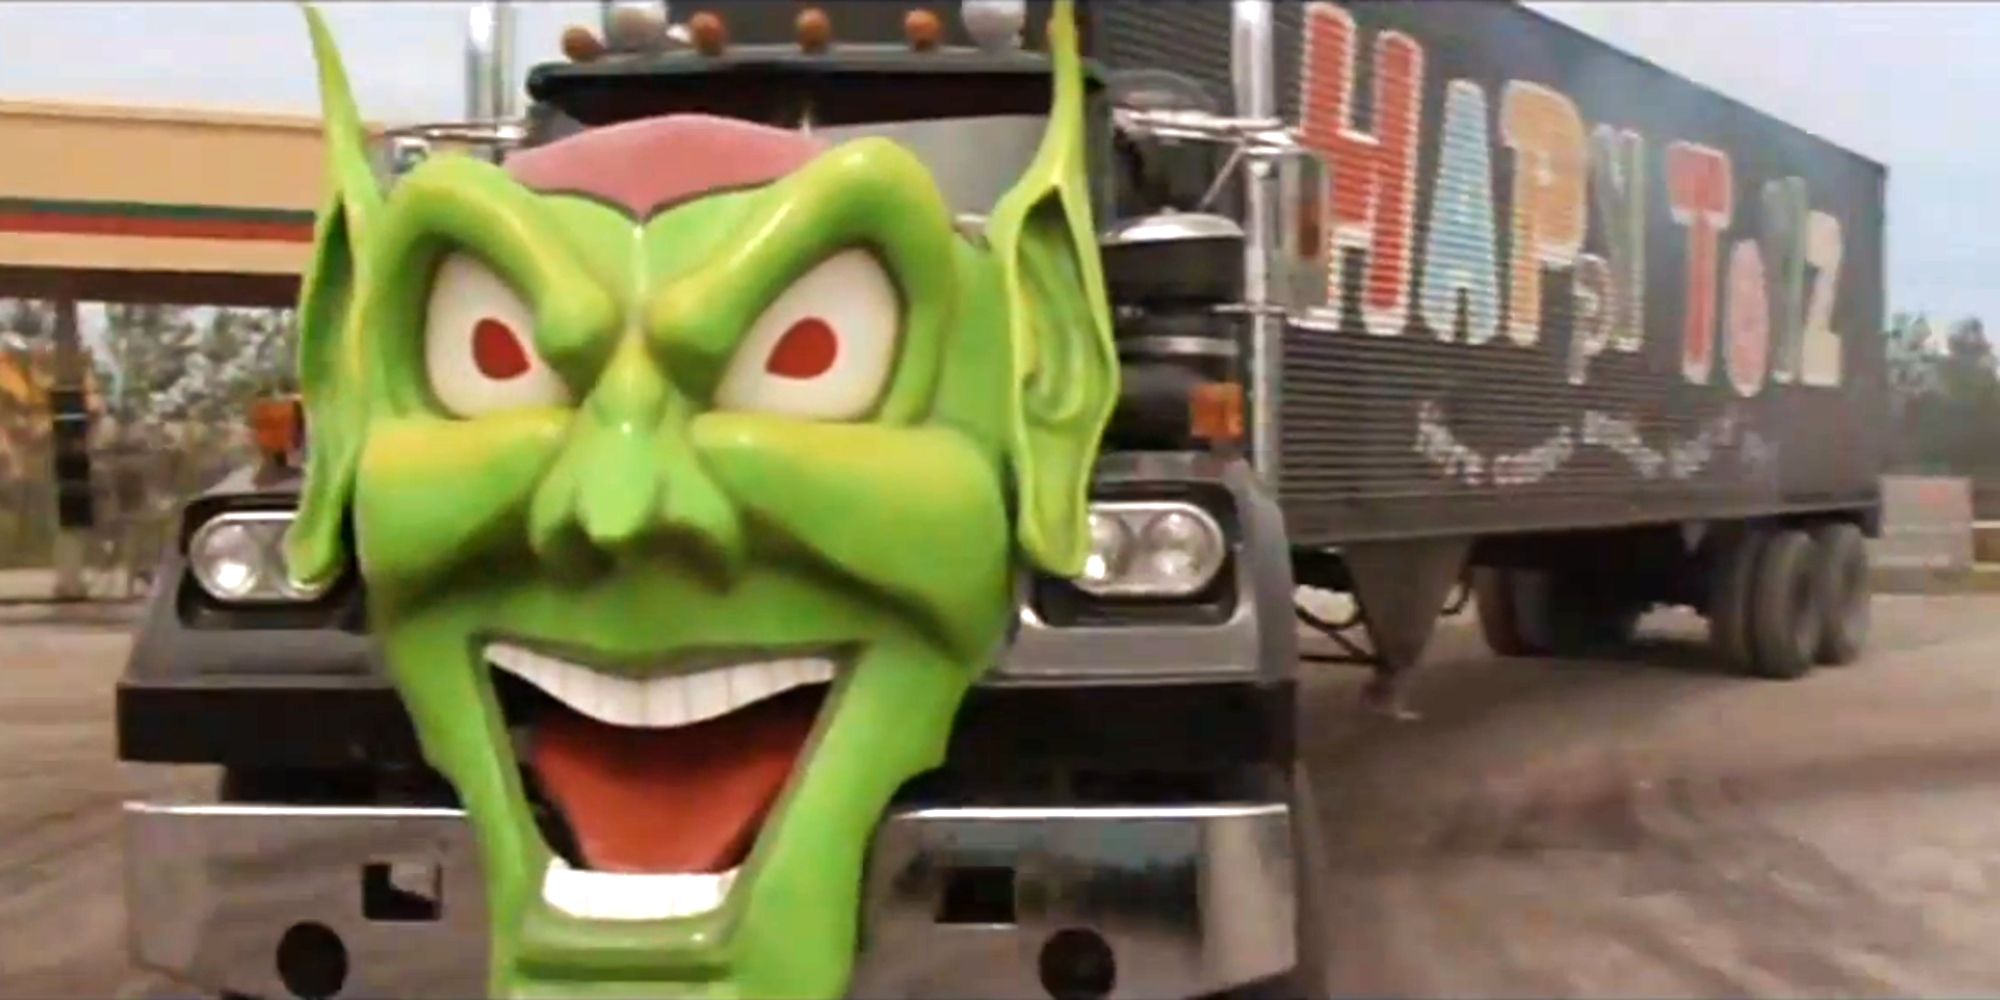 The Green Goblin-headed semi truck in the film Maximum Overdrive.